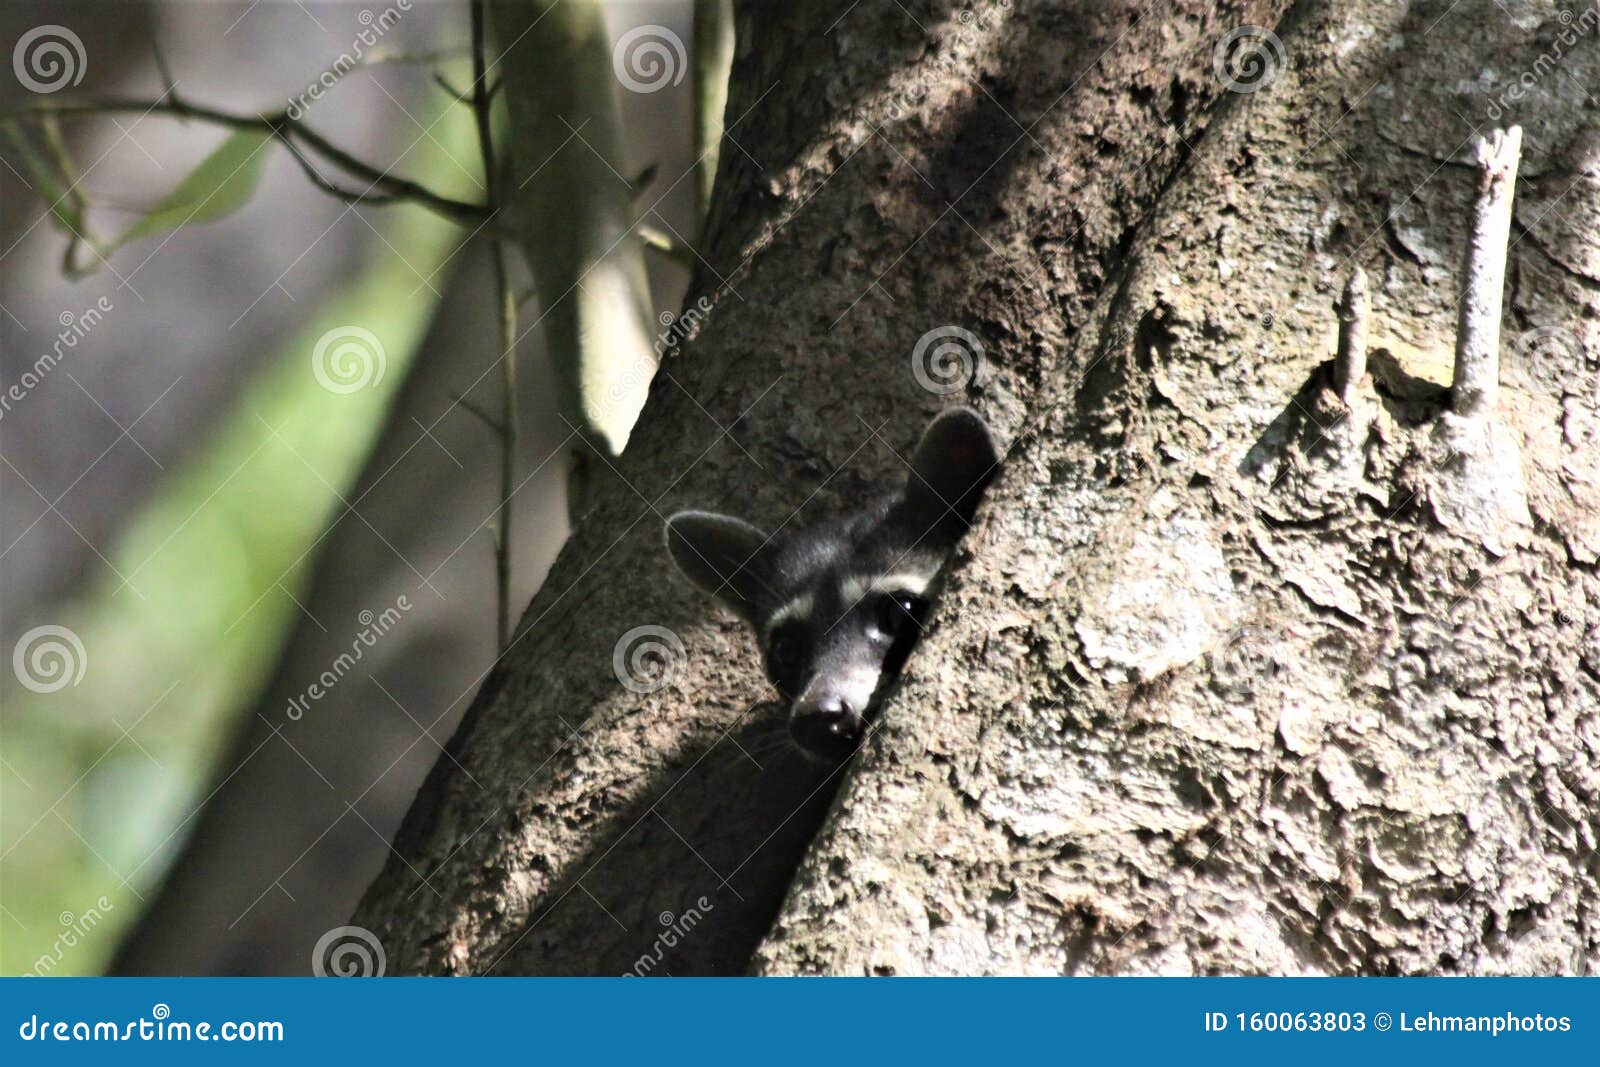 raccoon peeking out a hole in a tree